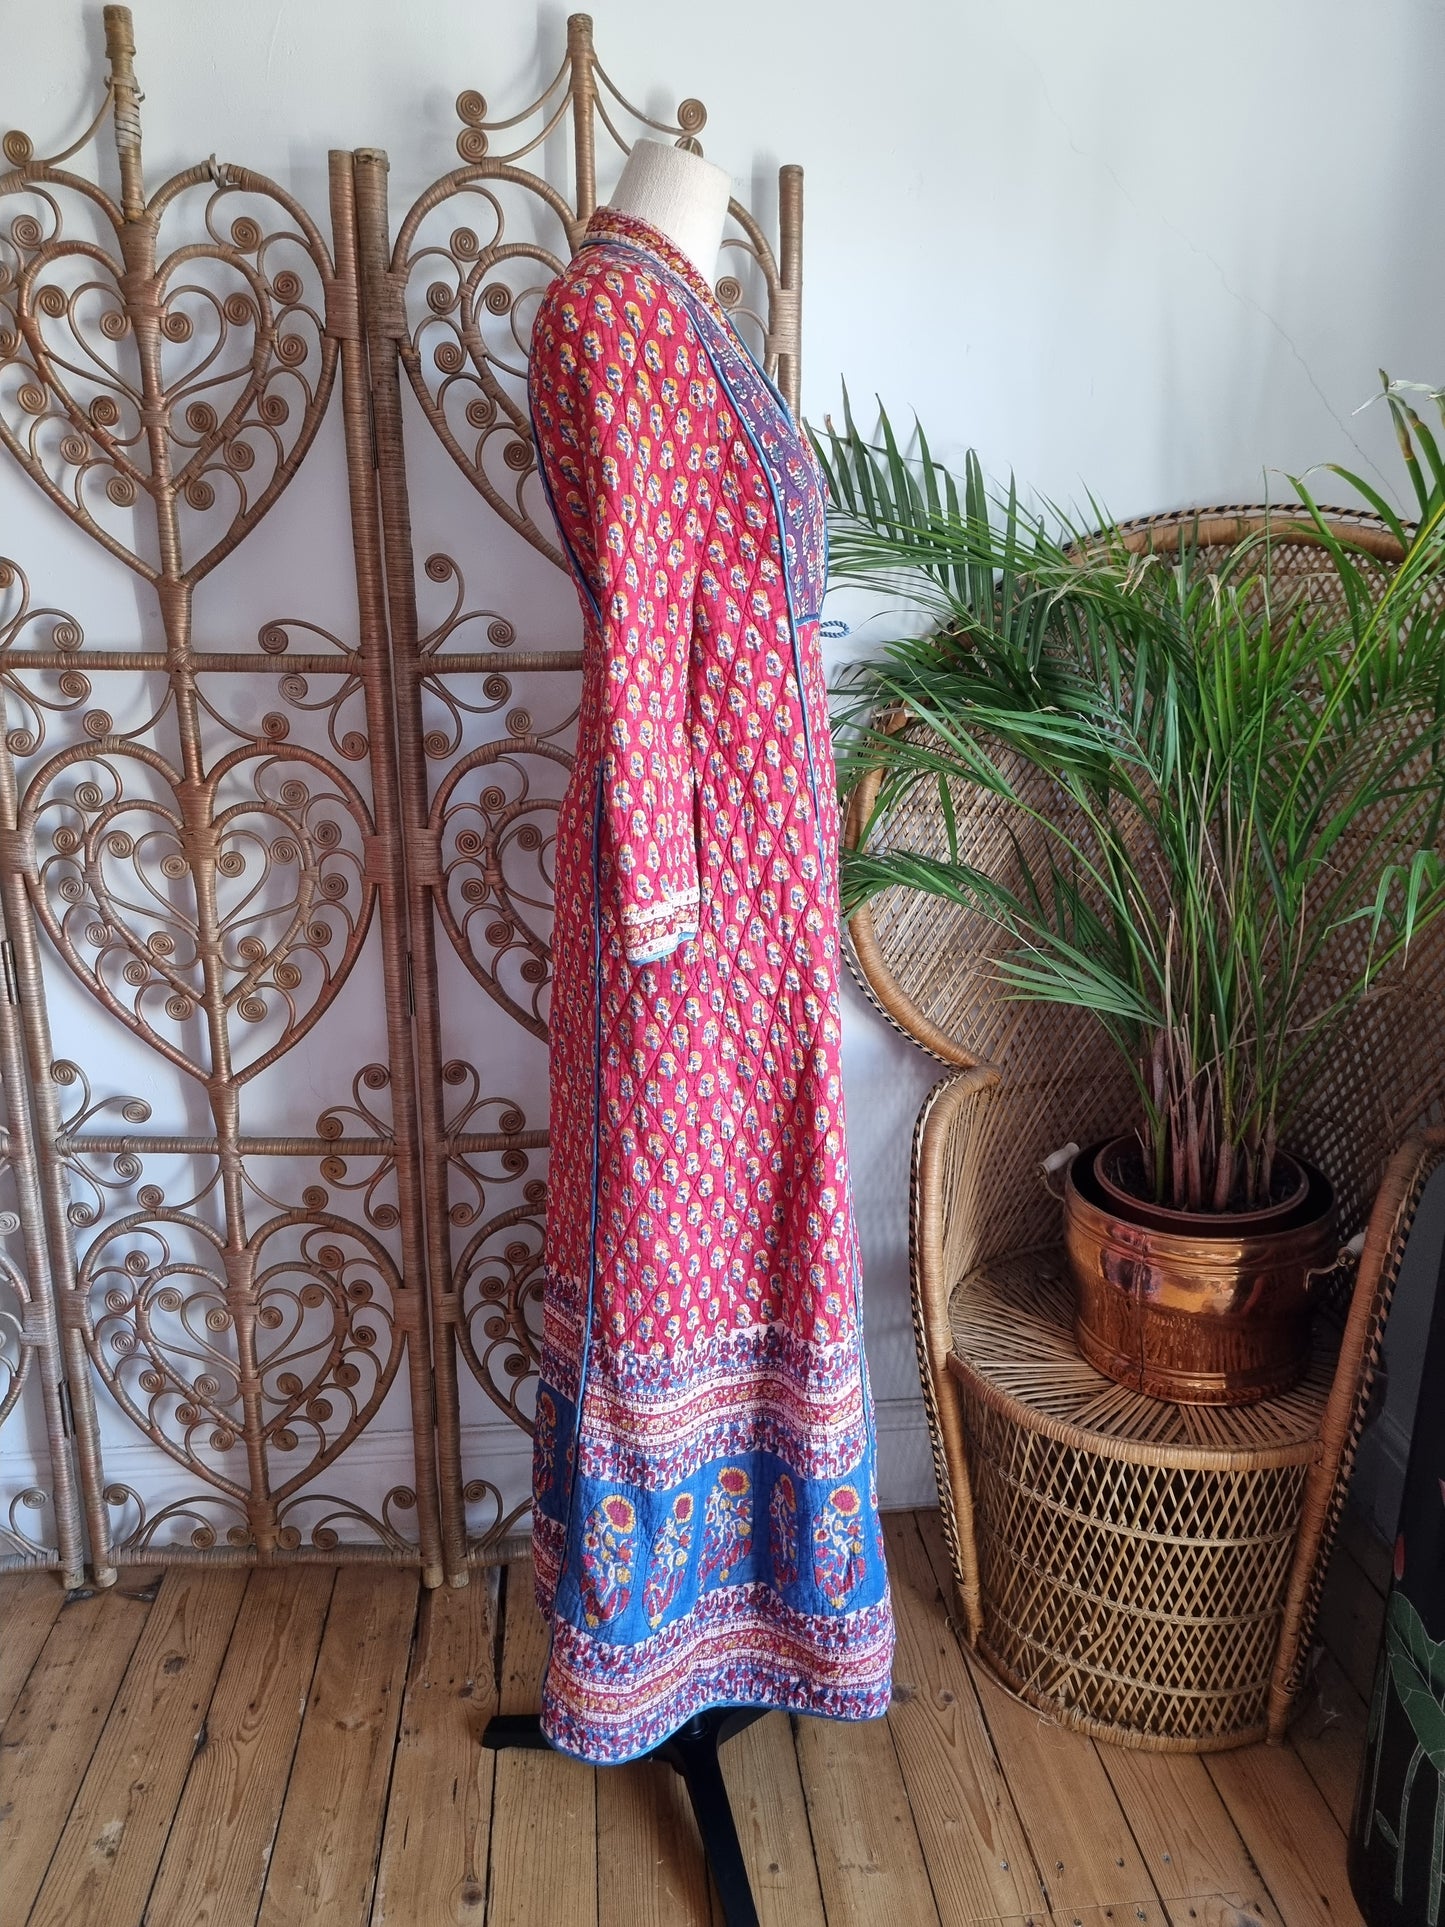 Vintage Anokhi Indian quilted jacket dress